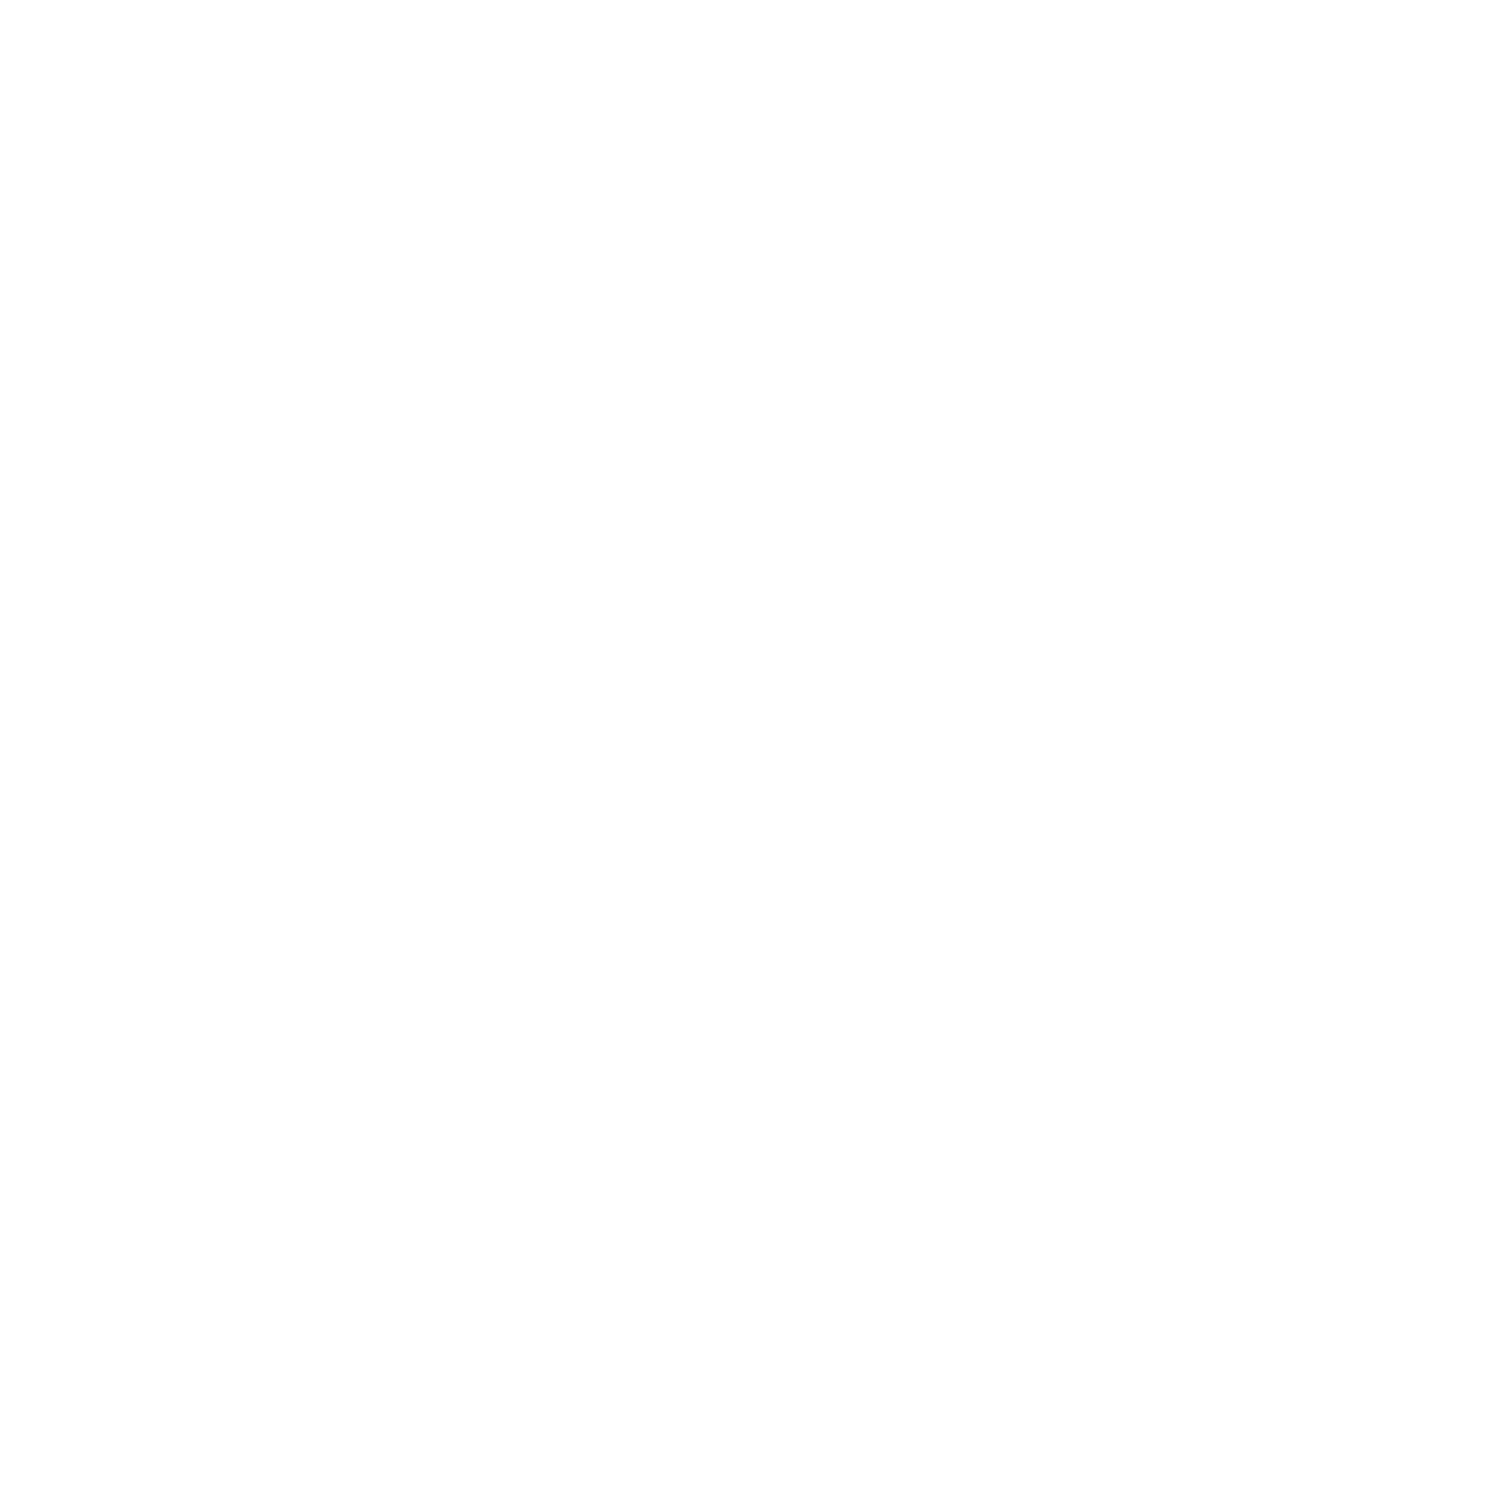 Malulani Astrology